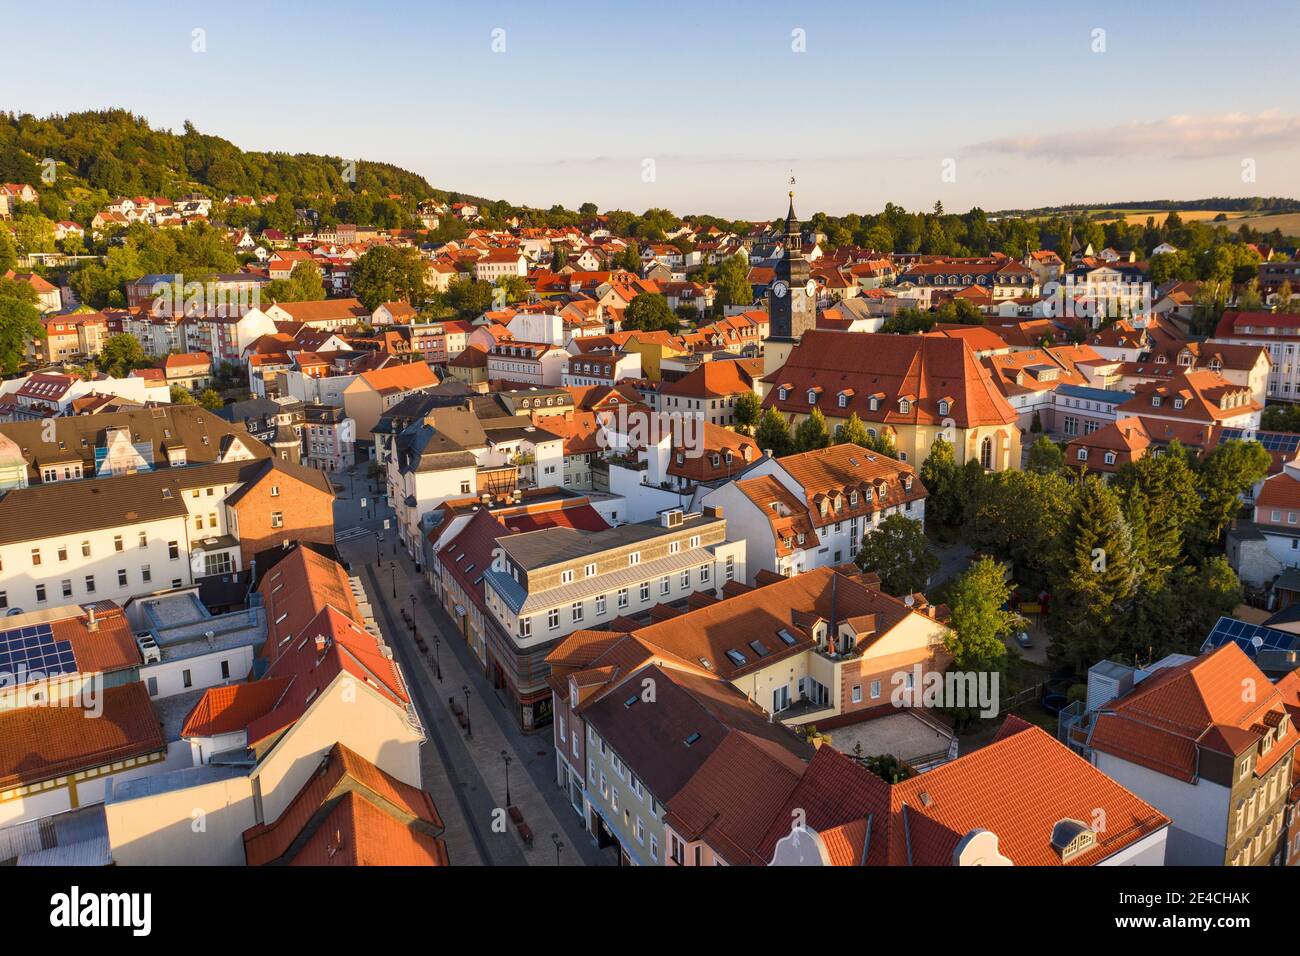 Germania, Turingia, Ilmenau, città, case, chiesa, panoramica, vista obliqua, vista aerea Foto Stock